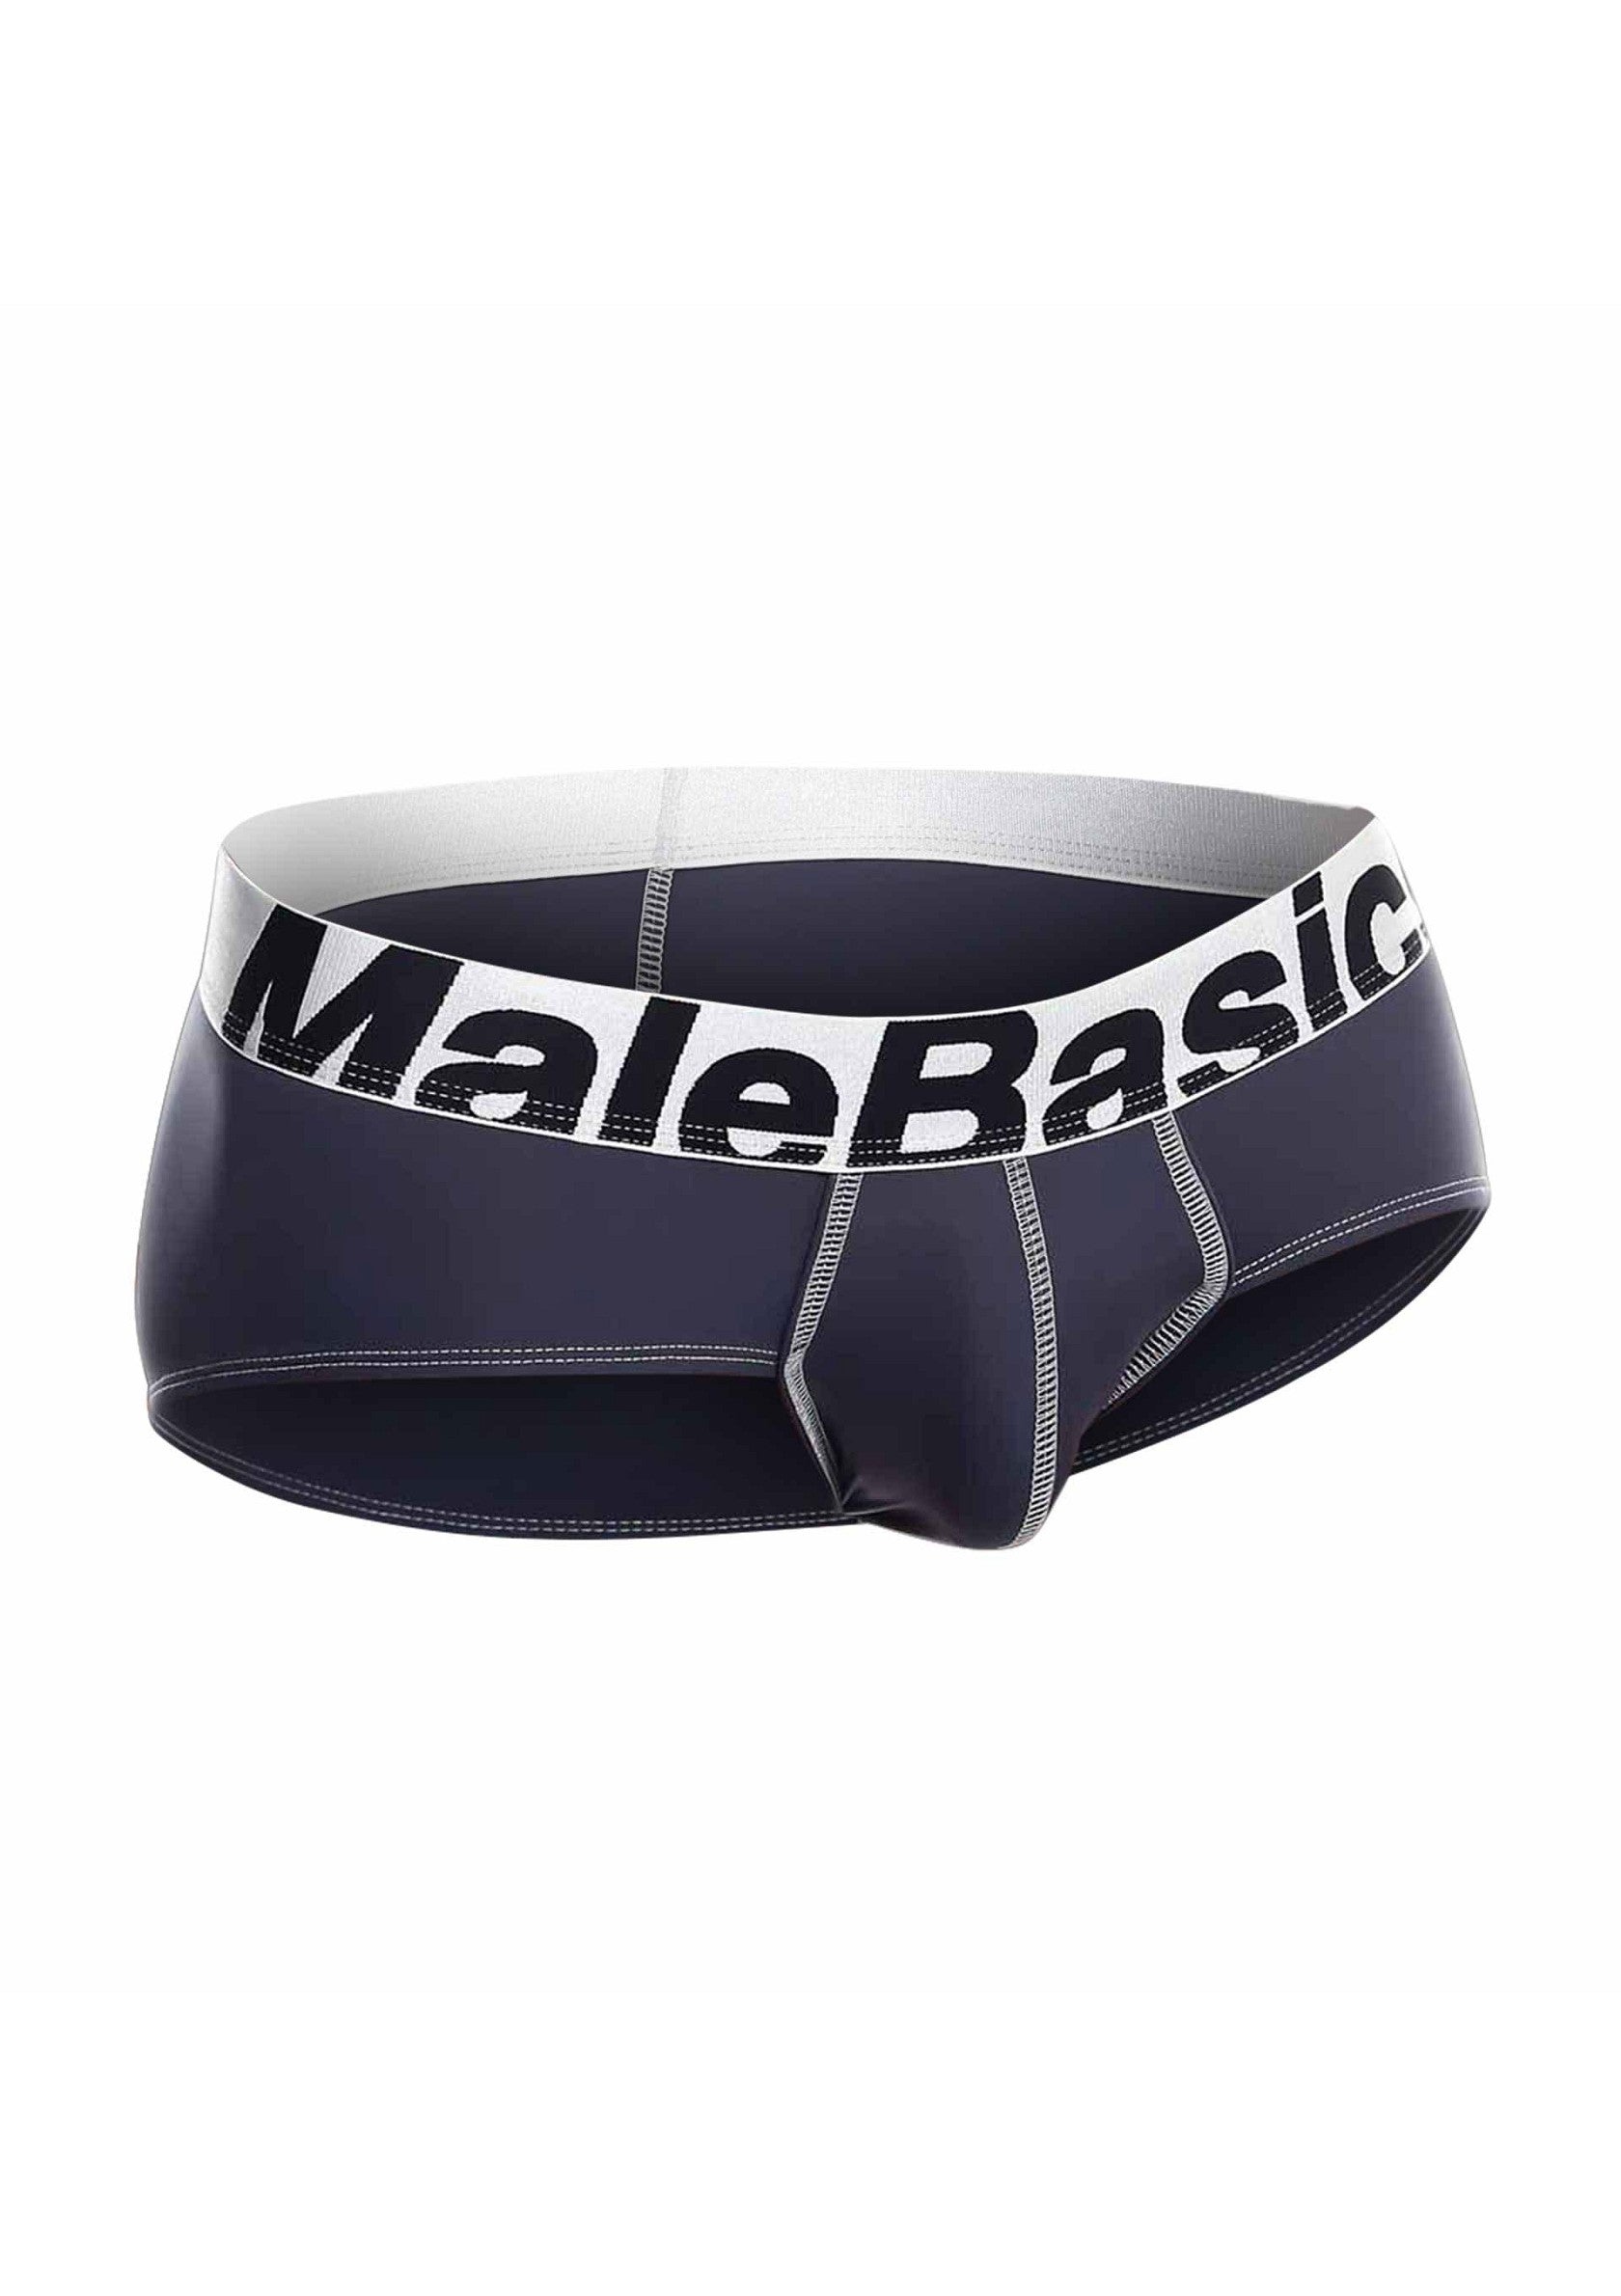 MaleBasics Microfiber Brief GREY S - 1